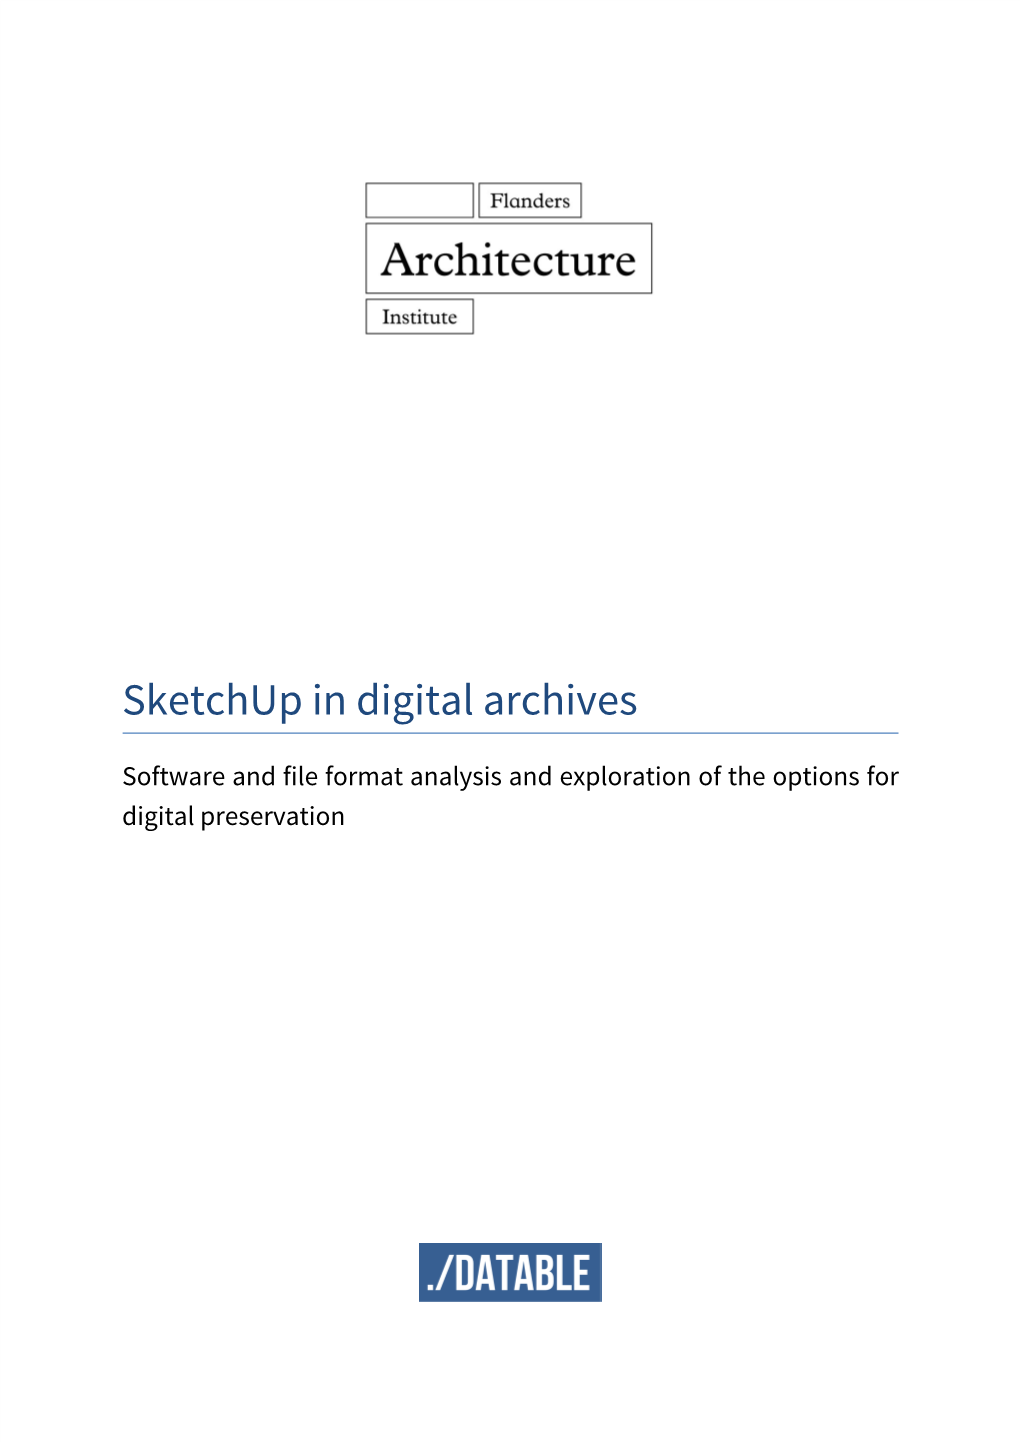 Sketchup in Digital Archives